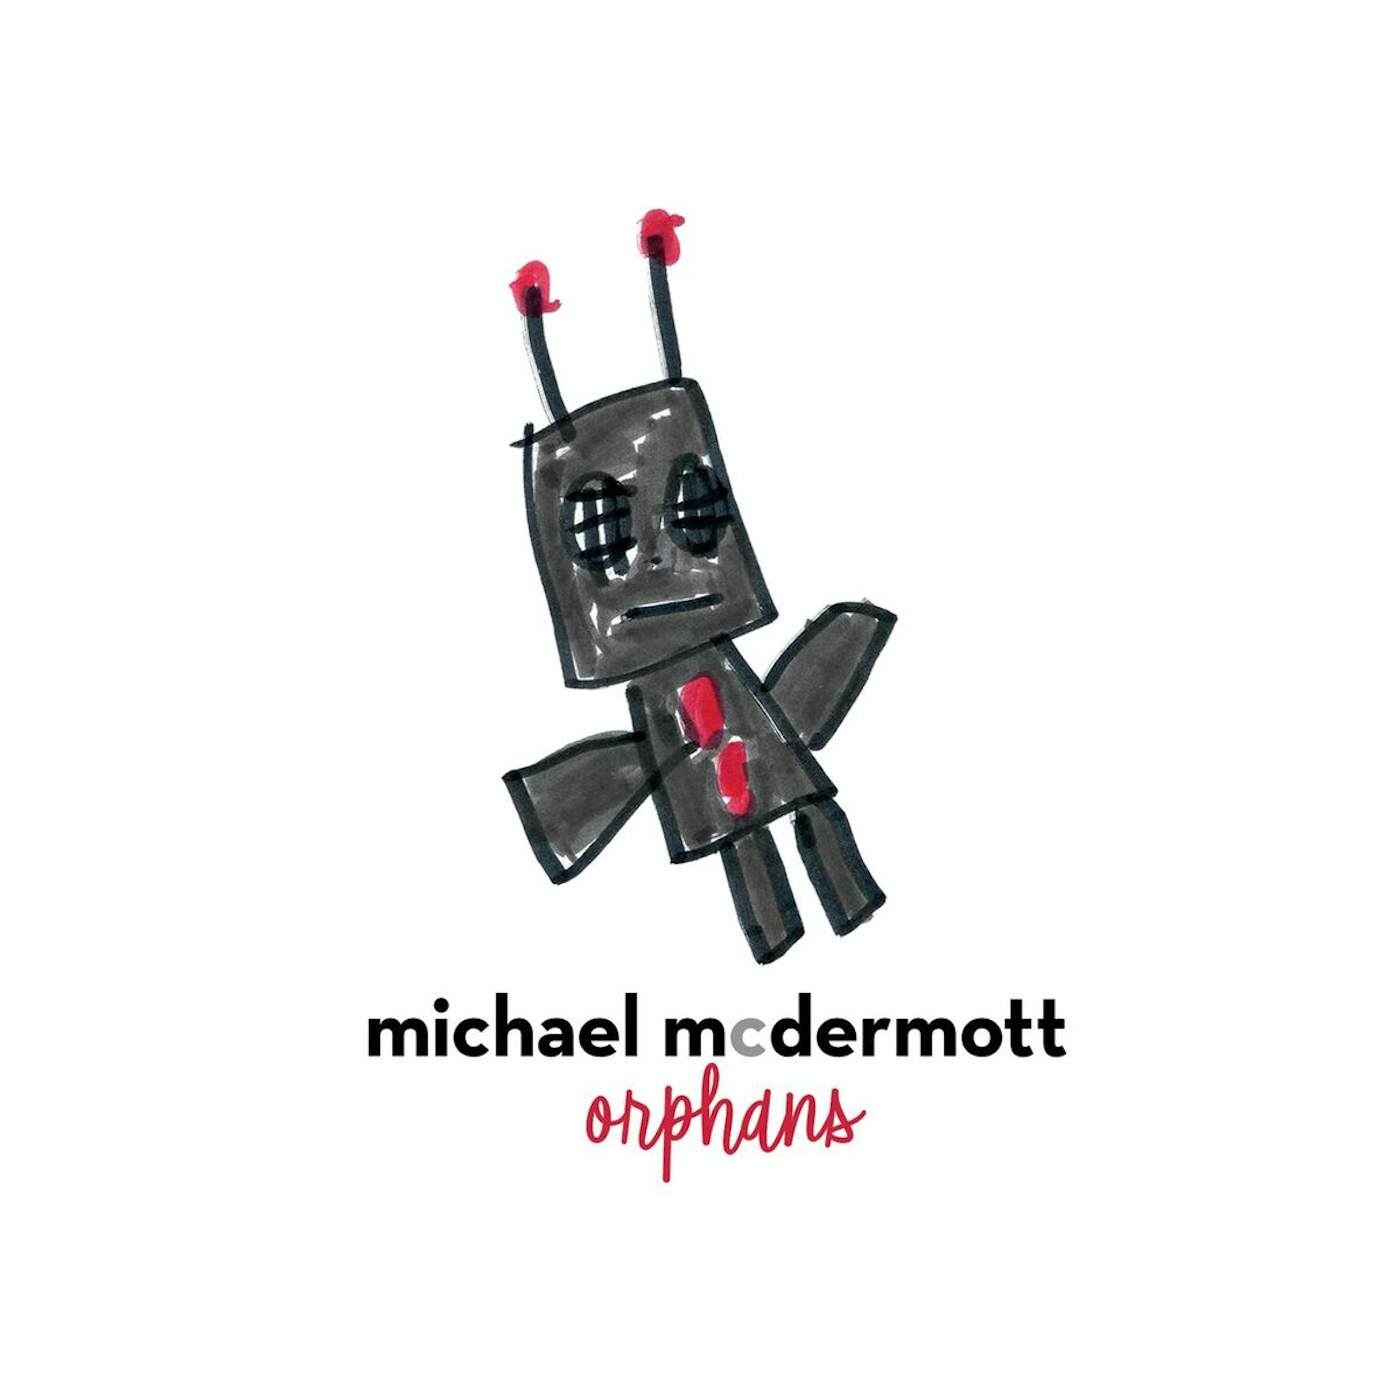 Michael McDermott ORPHANS CD